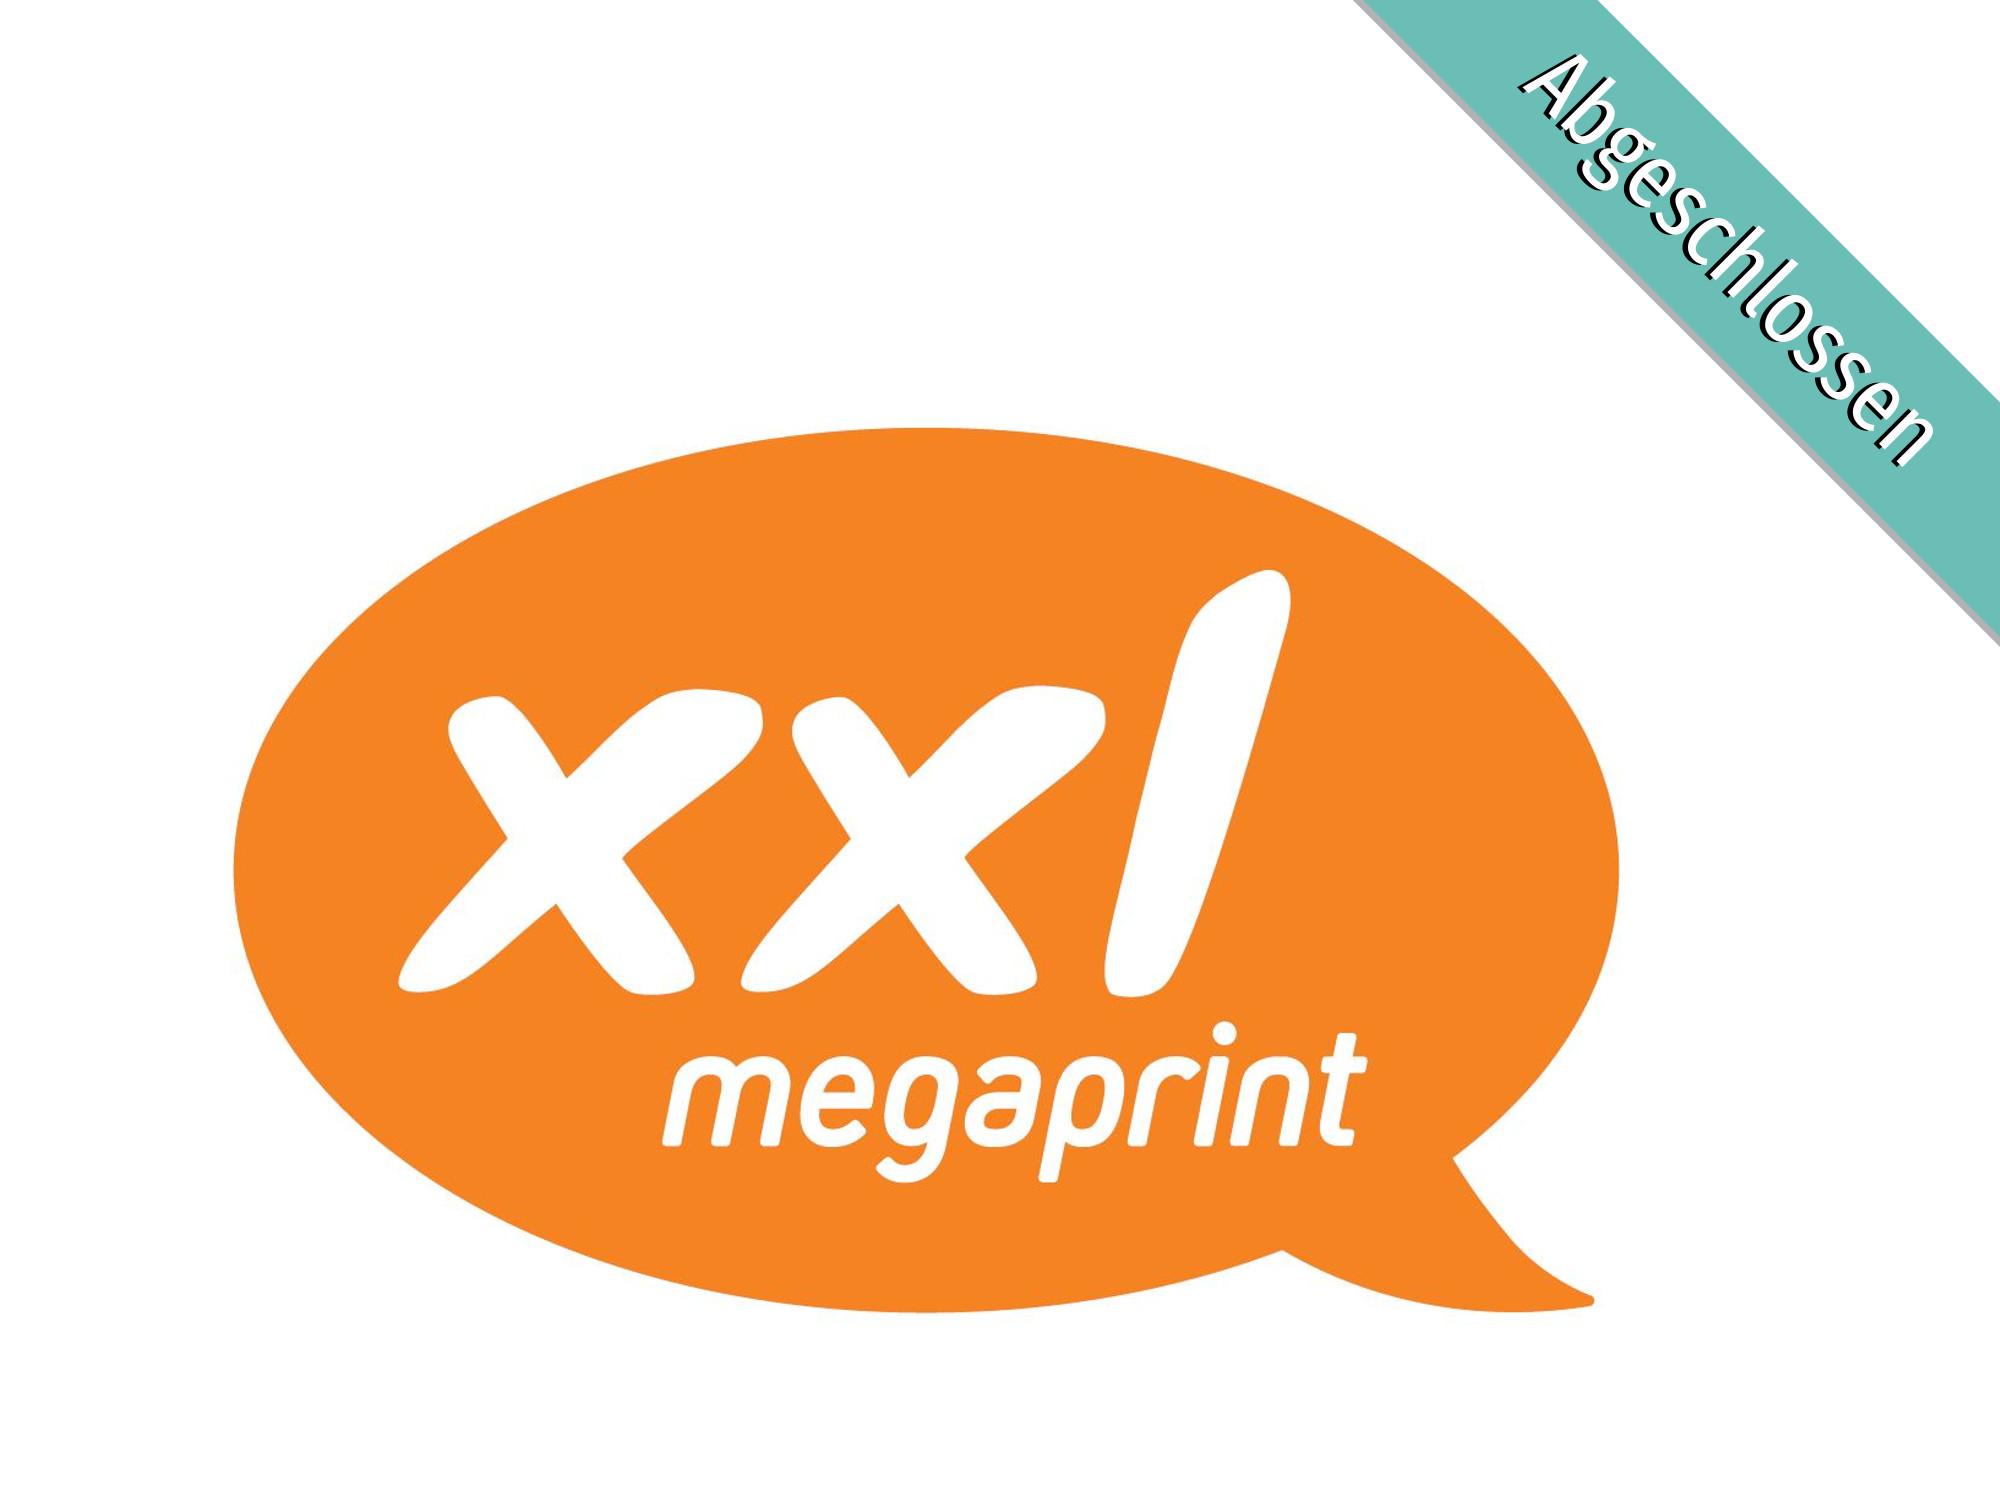 XXl Megaprint GmbH